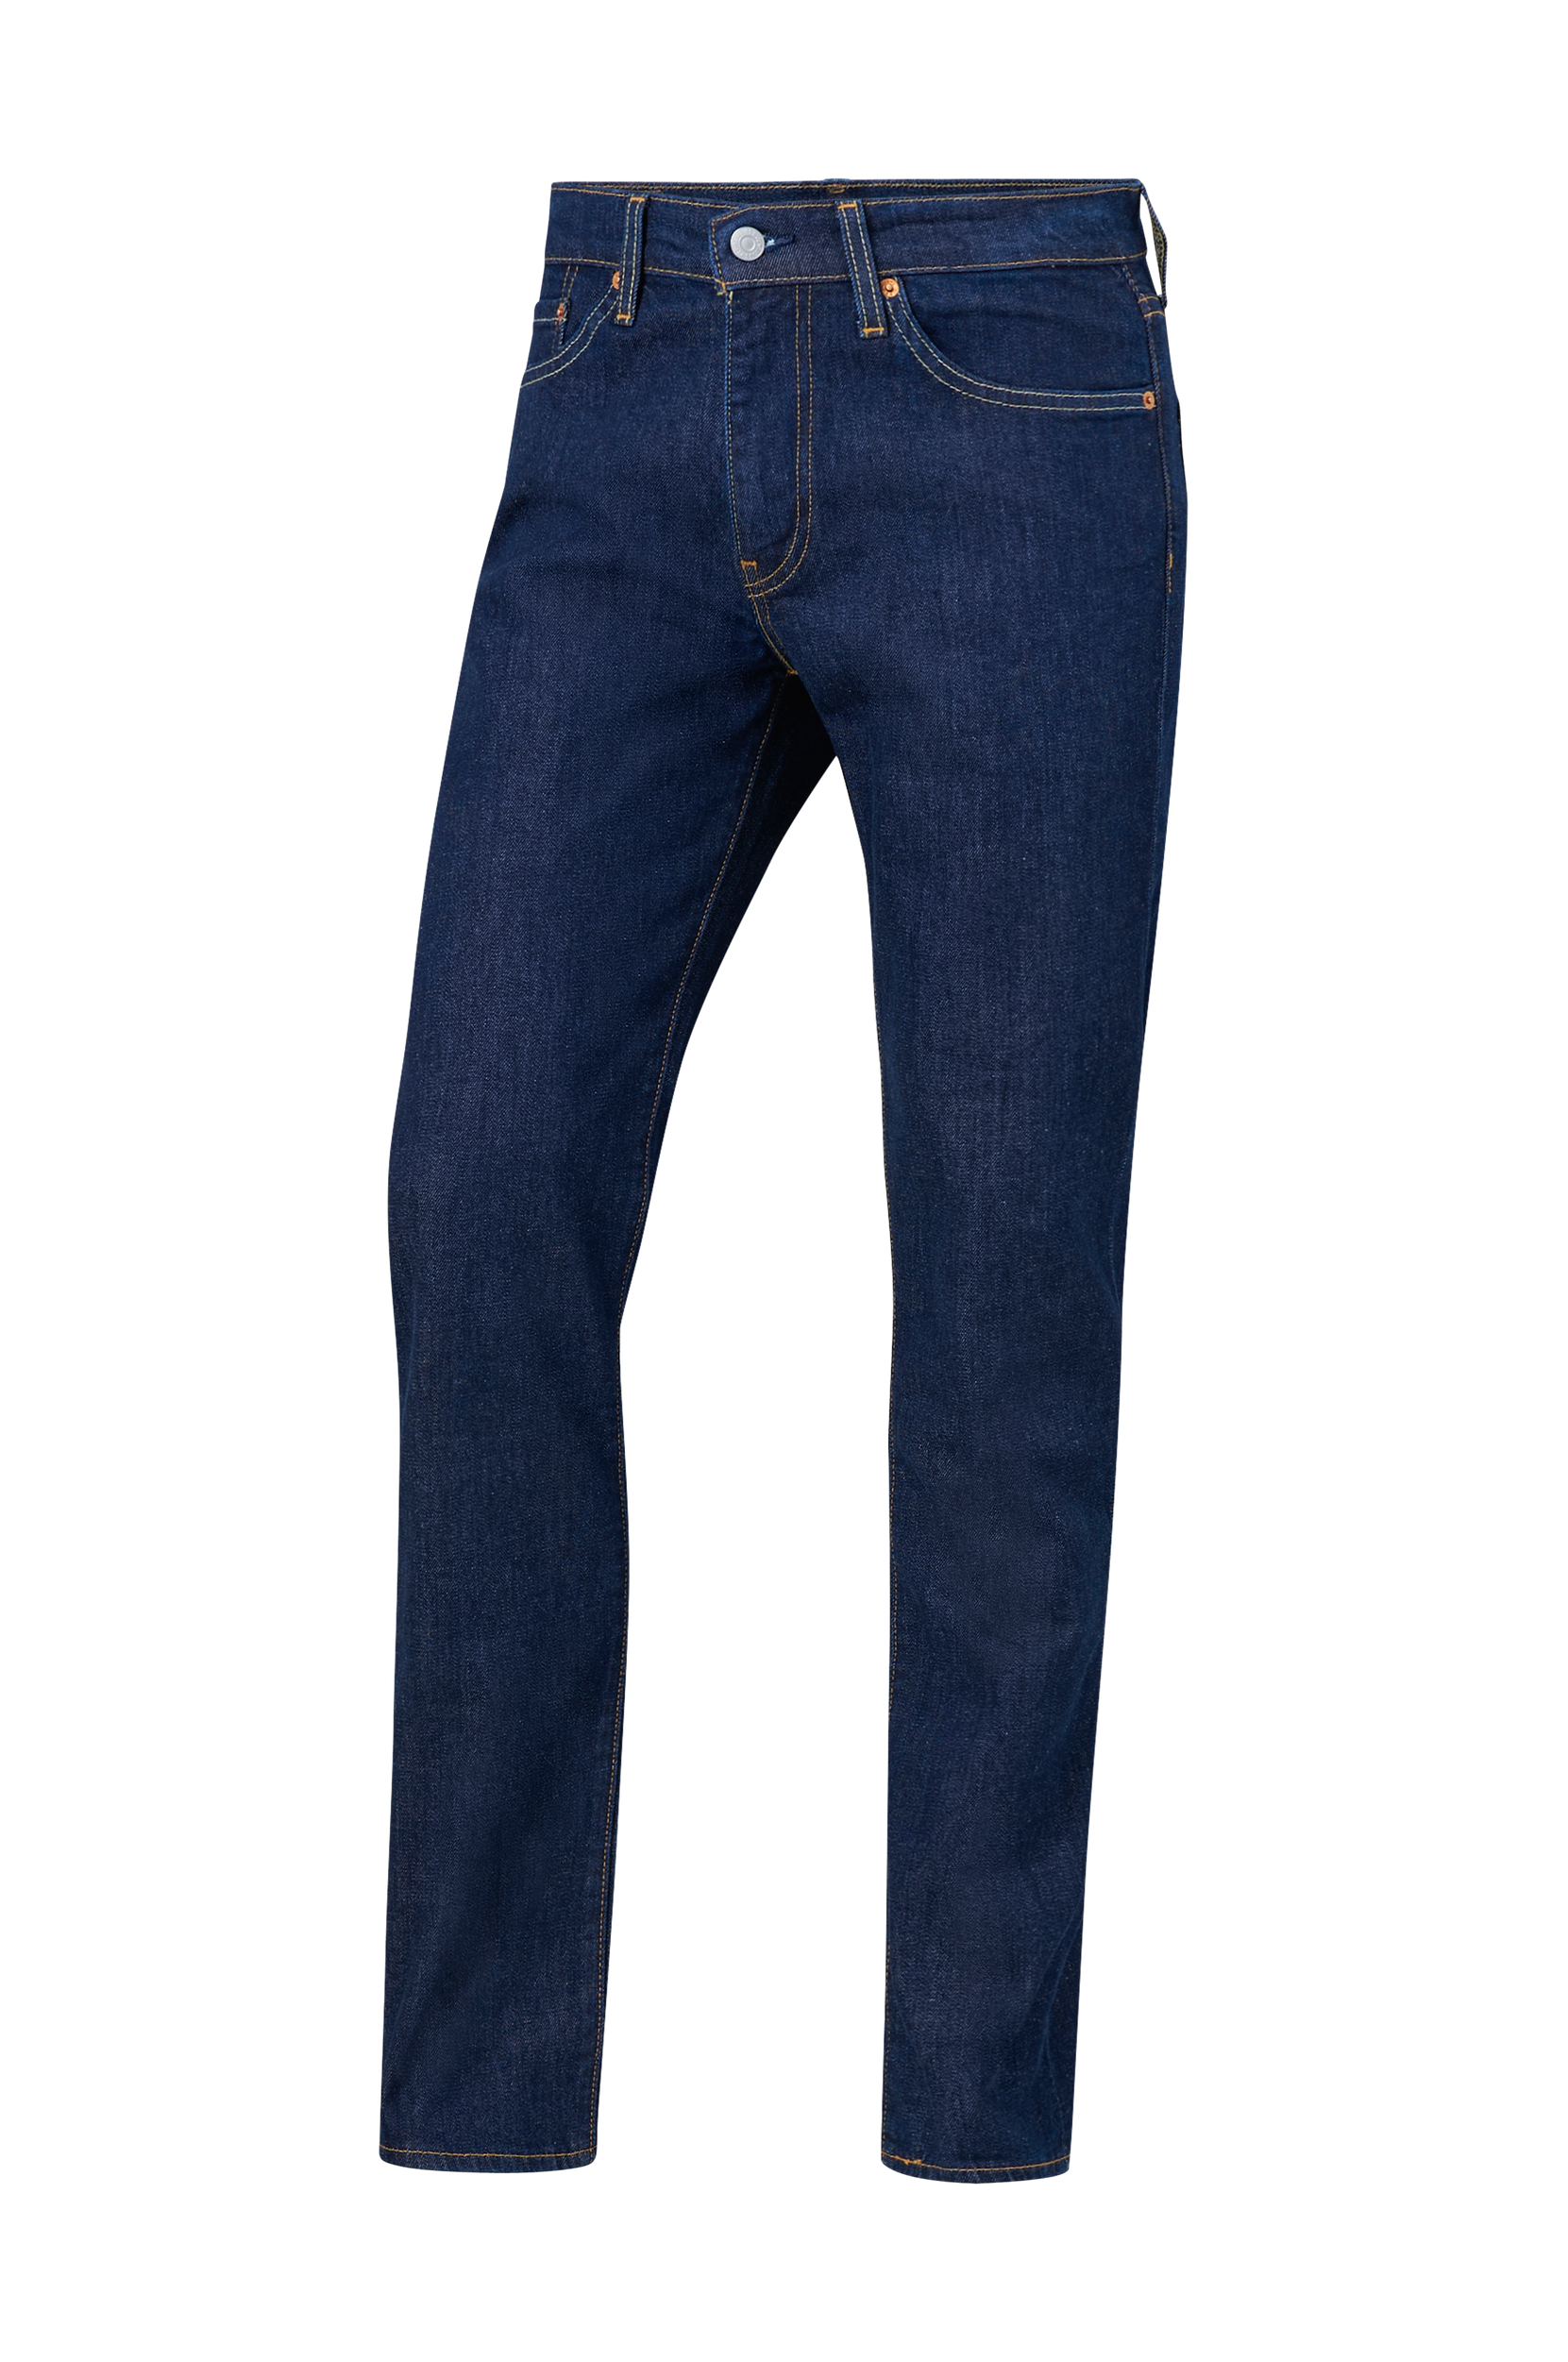 Levi's - Jeans 511, slim fit - Blå - W34/L32